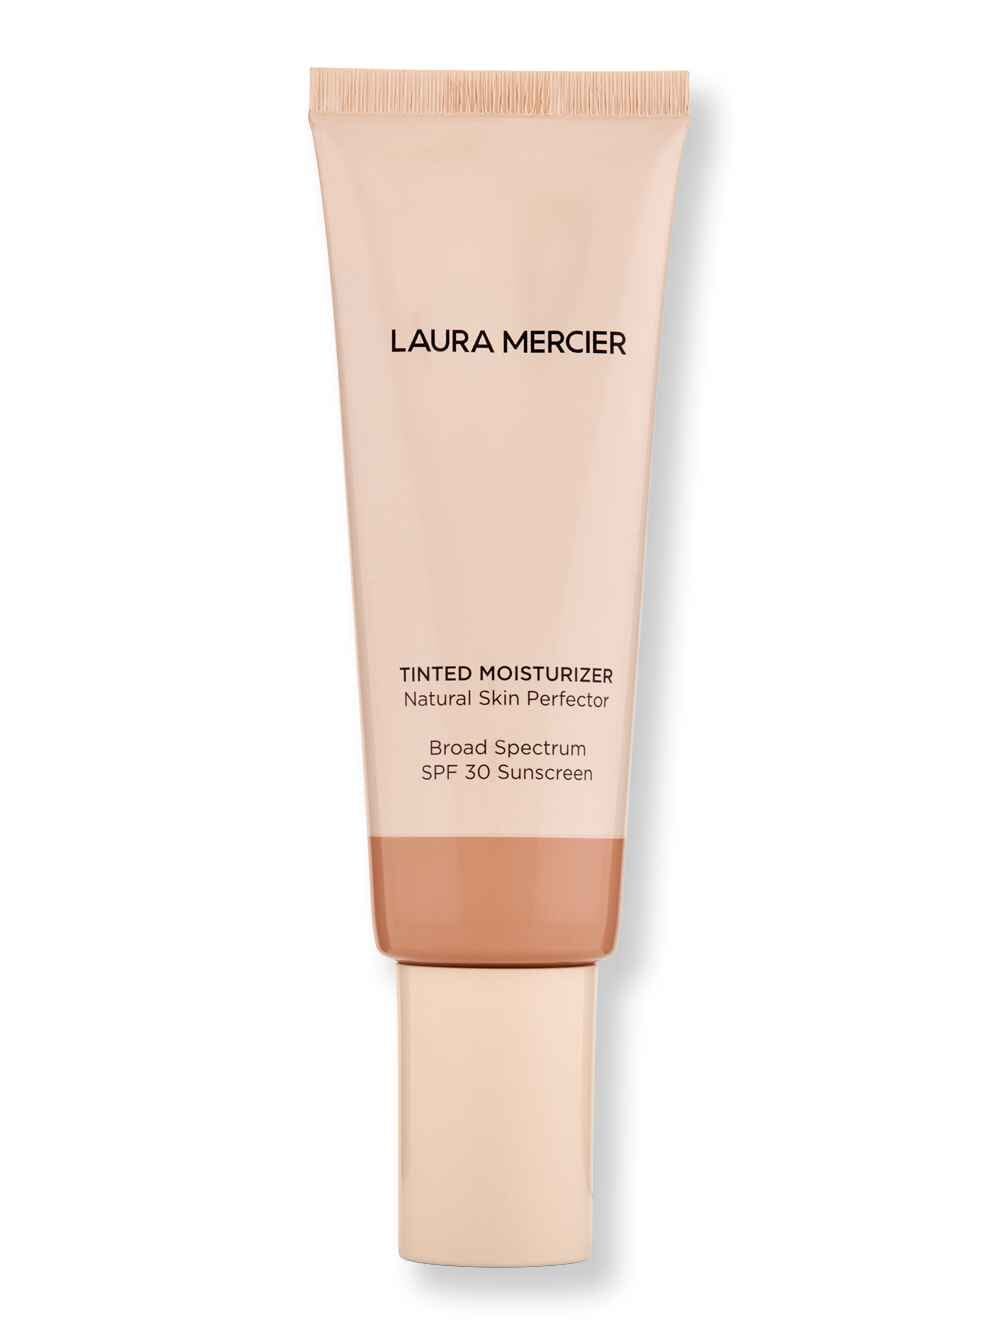 Laura Mercier Laura Mercier Tinted Moisturizer Natural Skin Perfector SPF30 1.7 oz50 ml4W1-Tawny Tinted Moisturizers & Foundations 